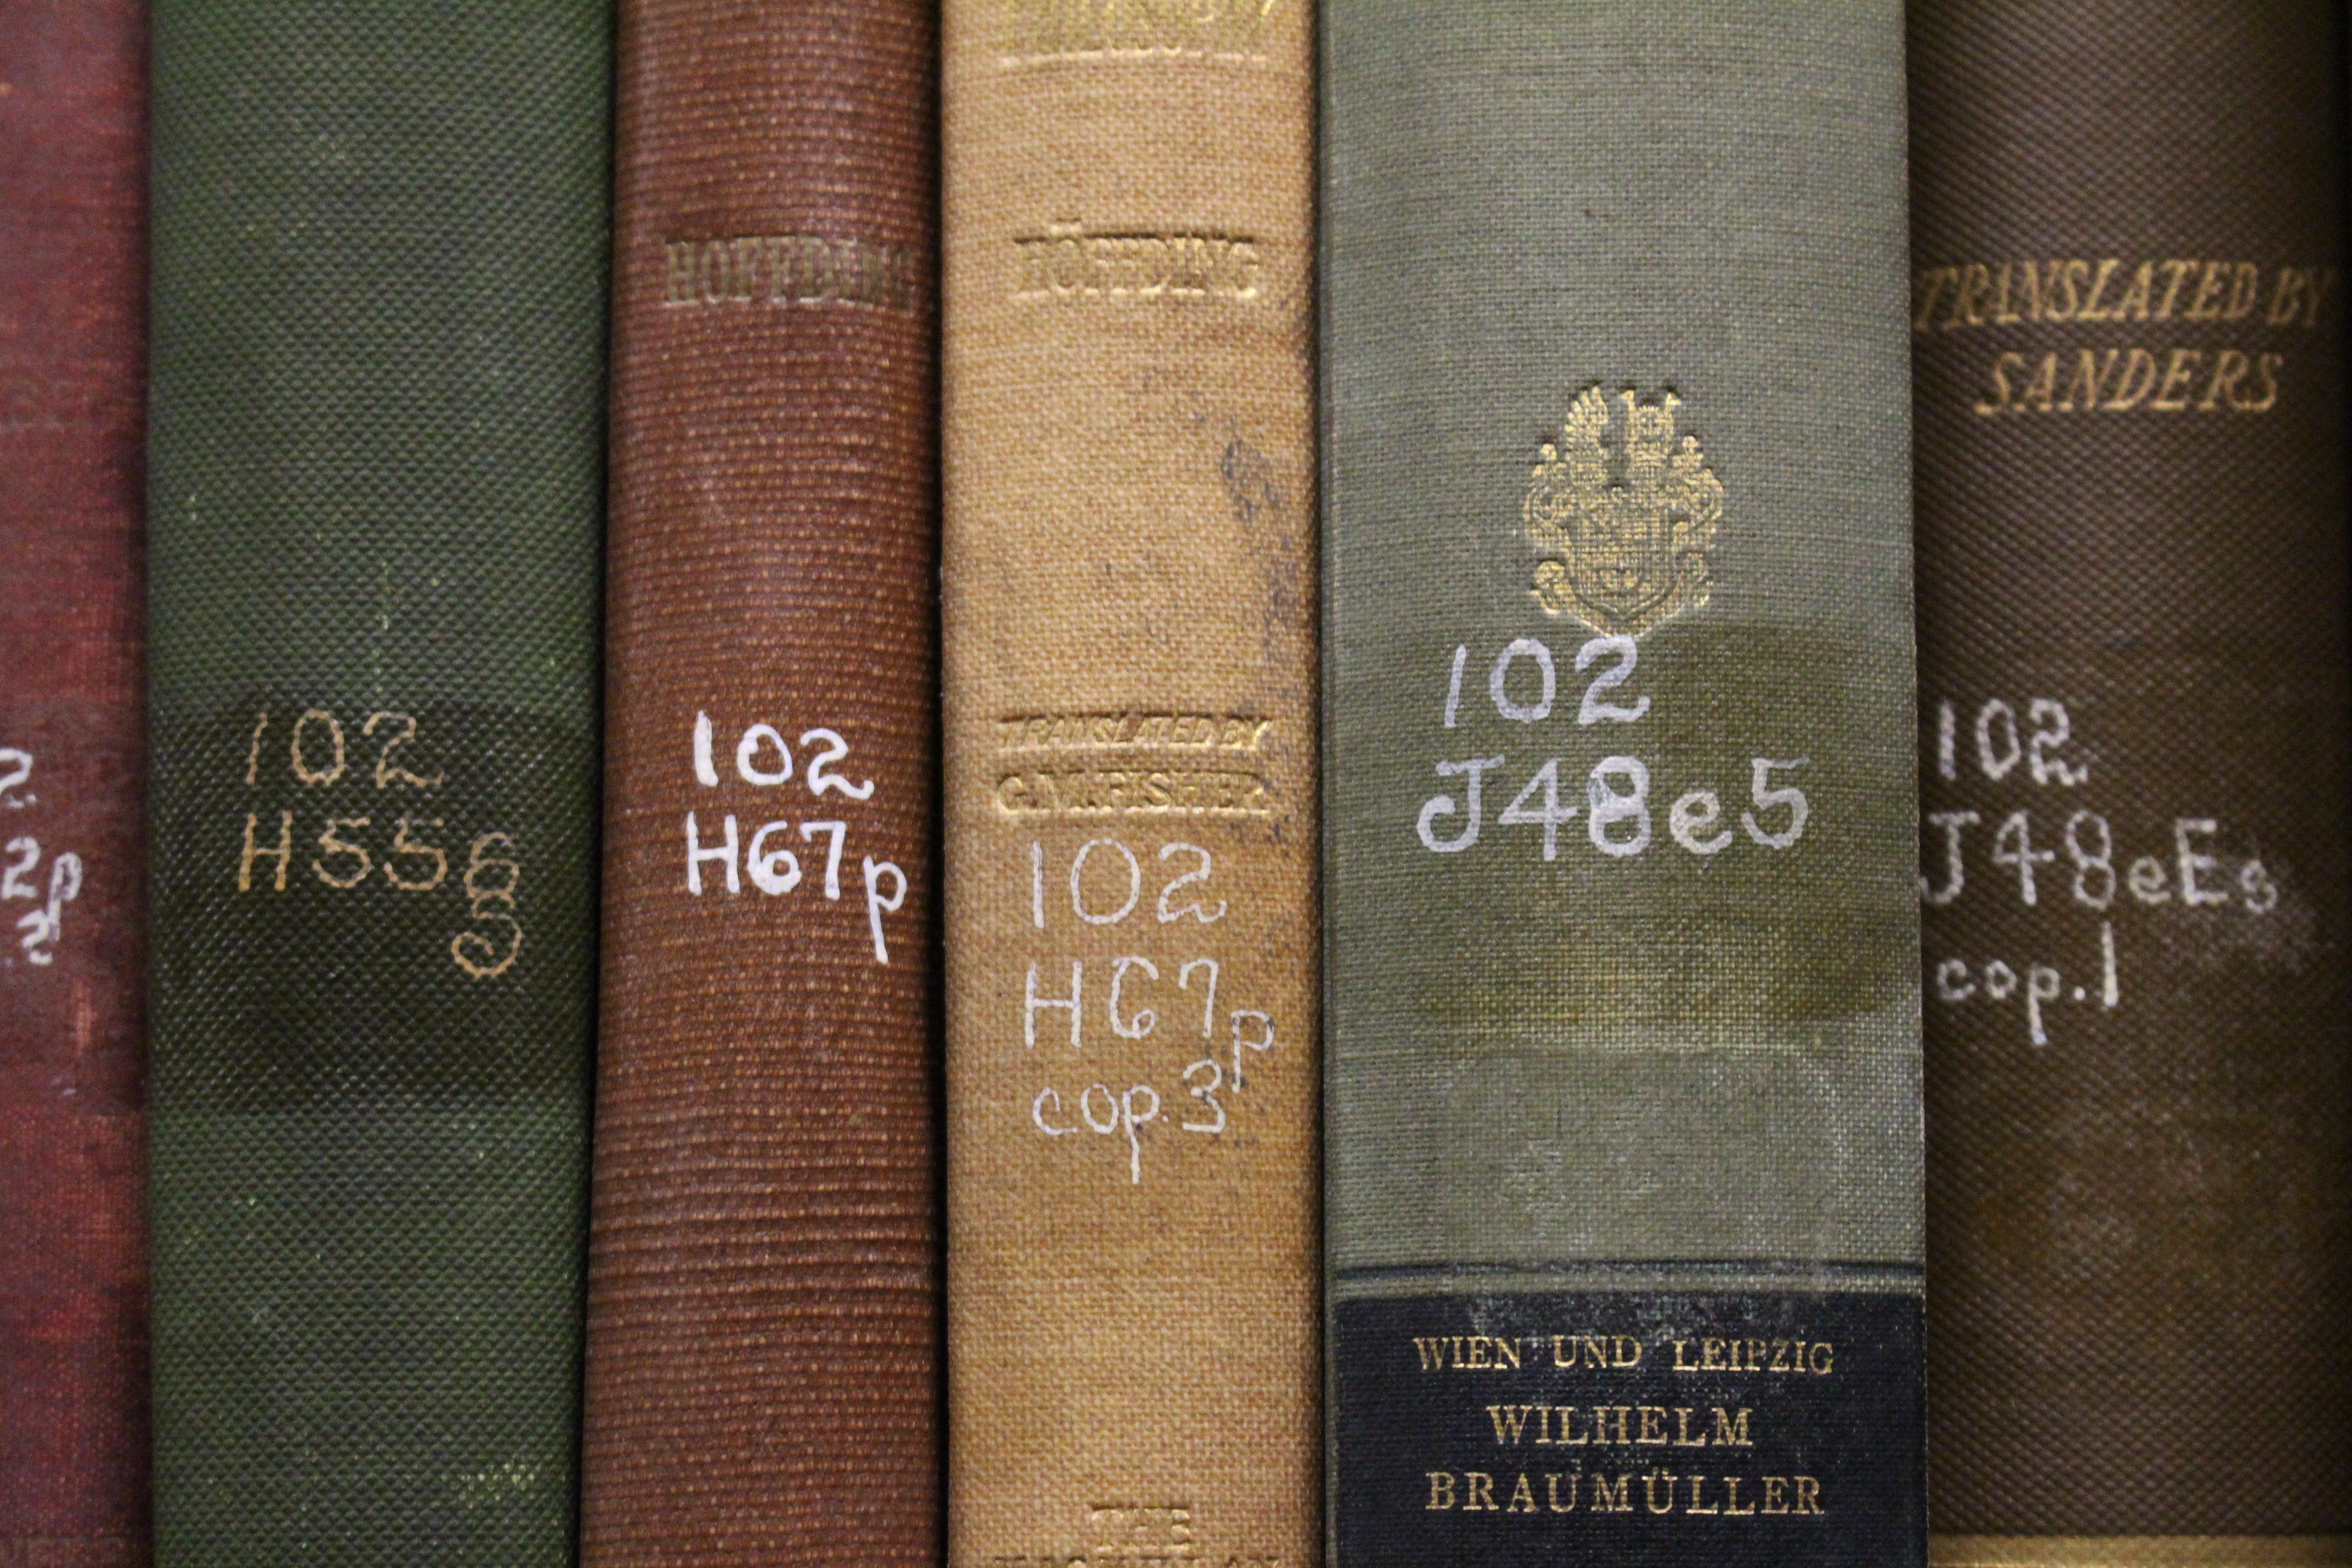 Books shelved in Dewey Decimal System